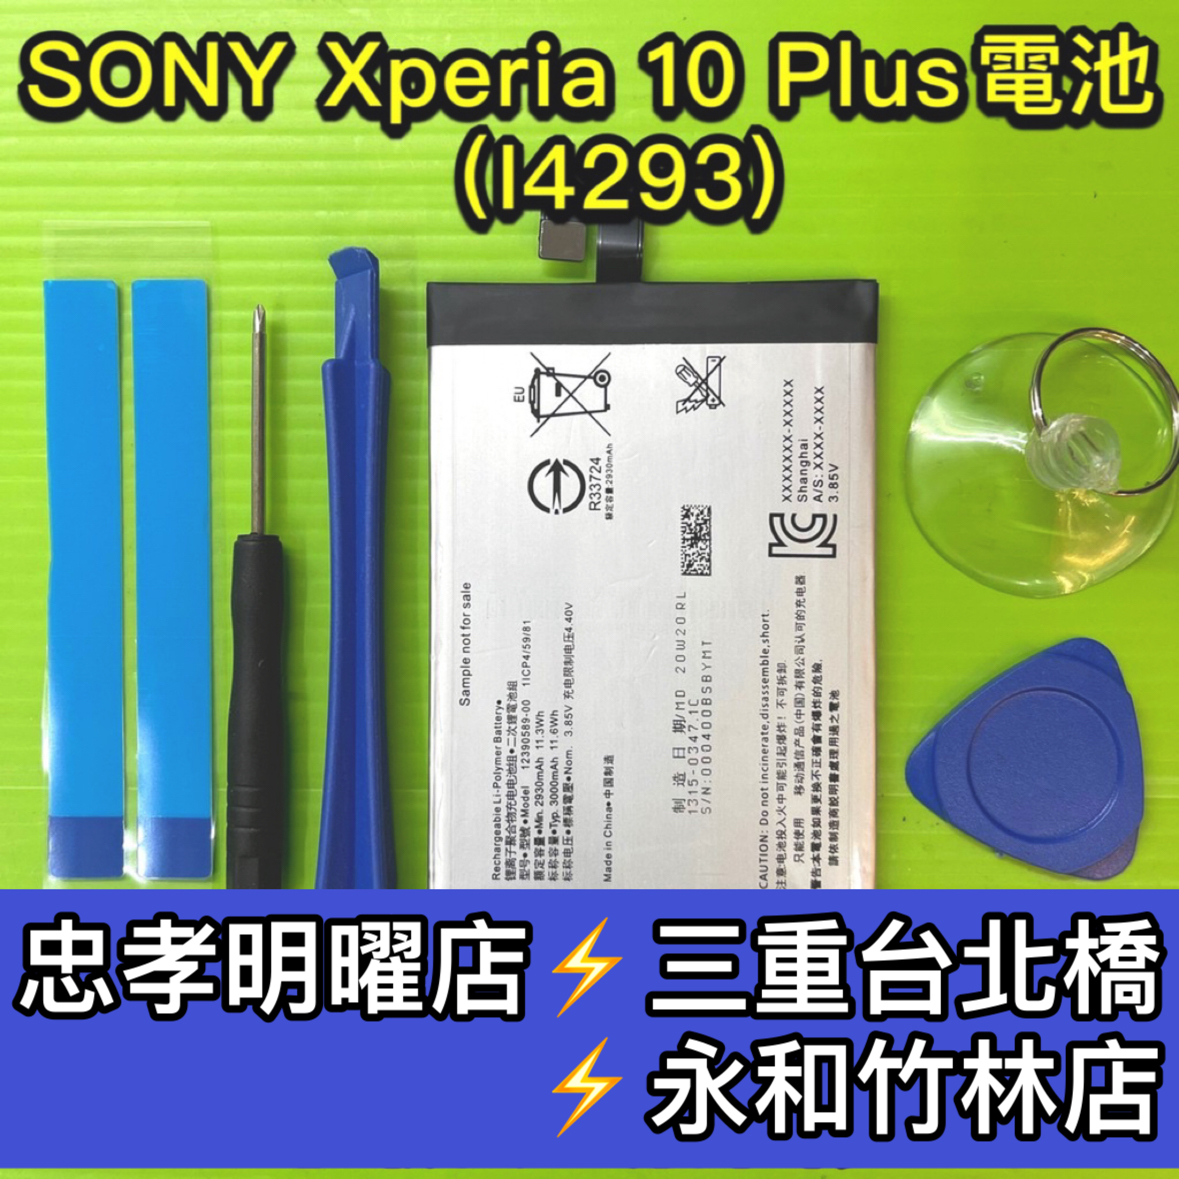 SONY Xperia 10 Plus 電池 i4293 電池 10plus 電池 X10+電池 電池維修 電池更換